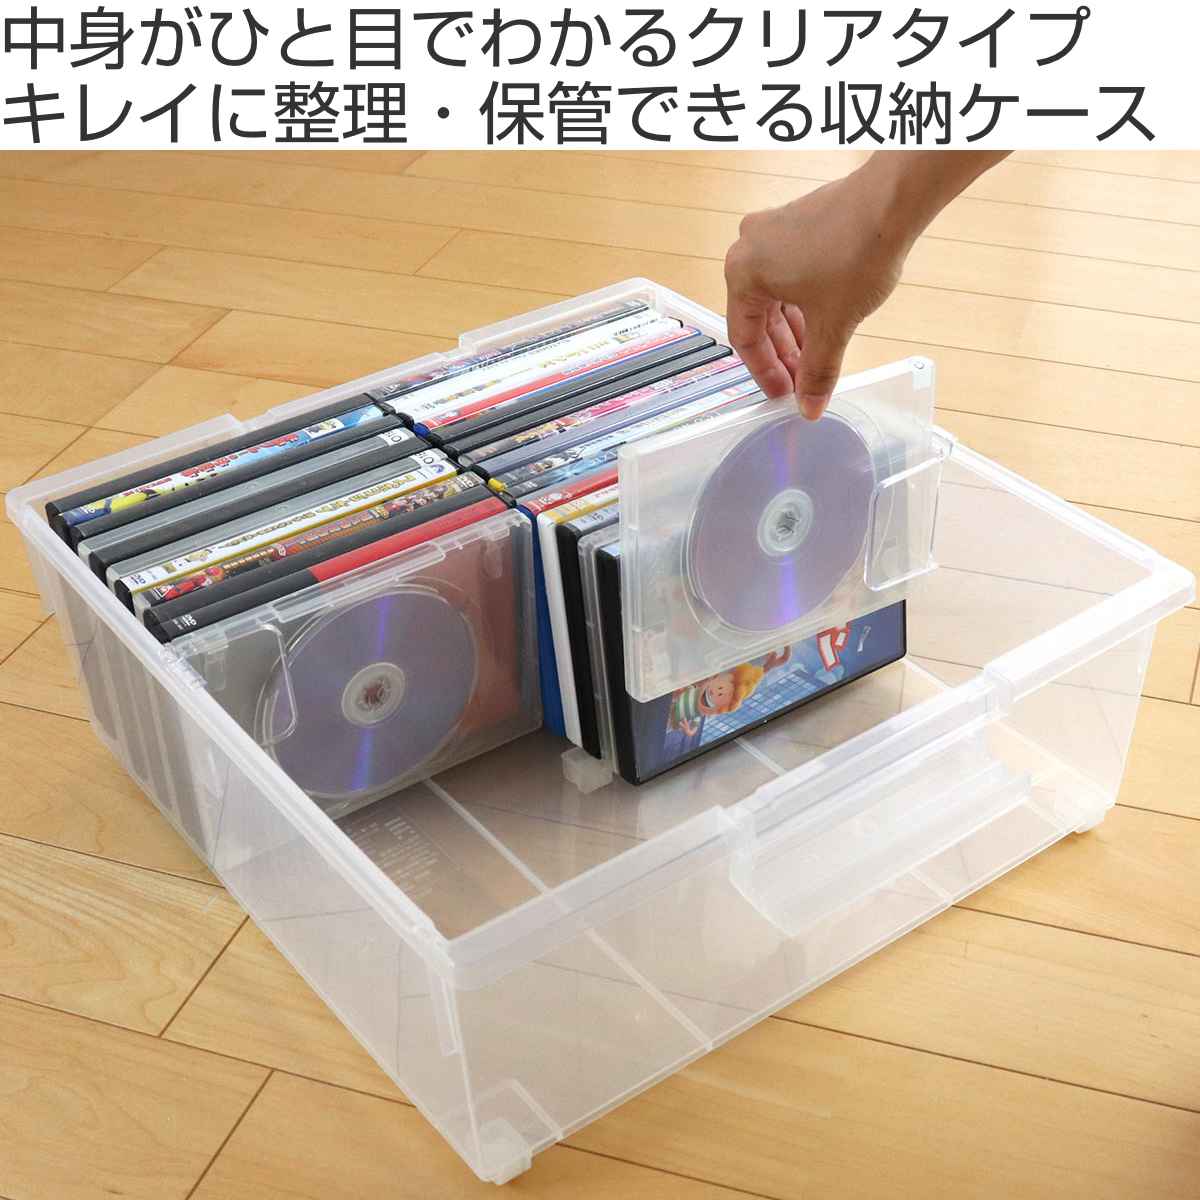 DVD 収納ケース - 本